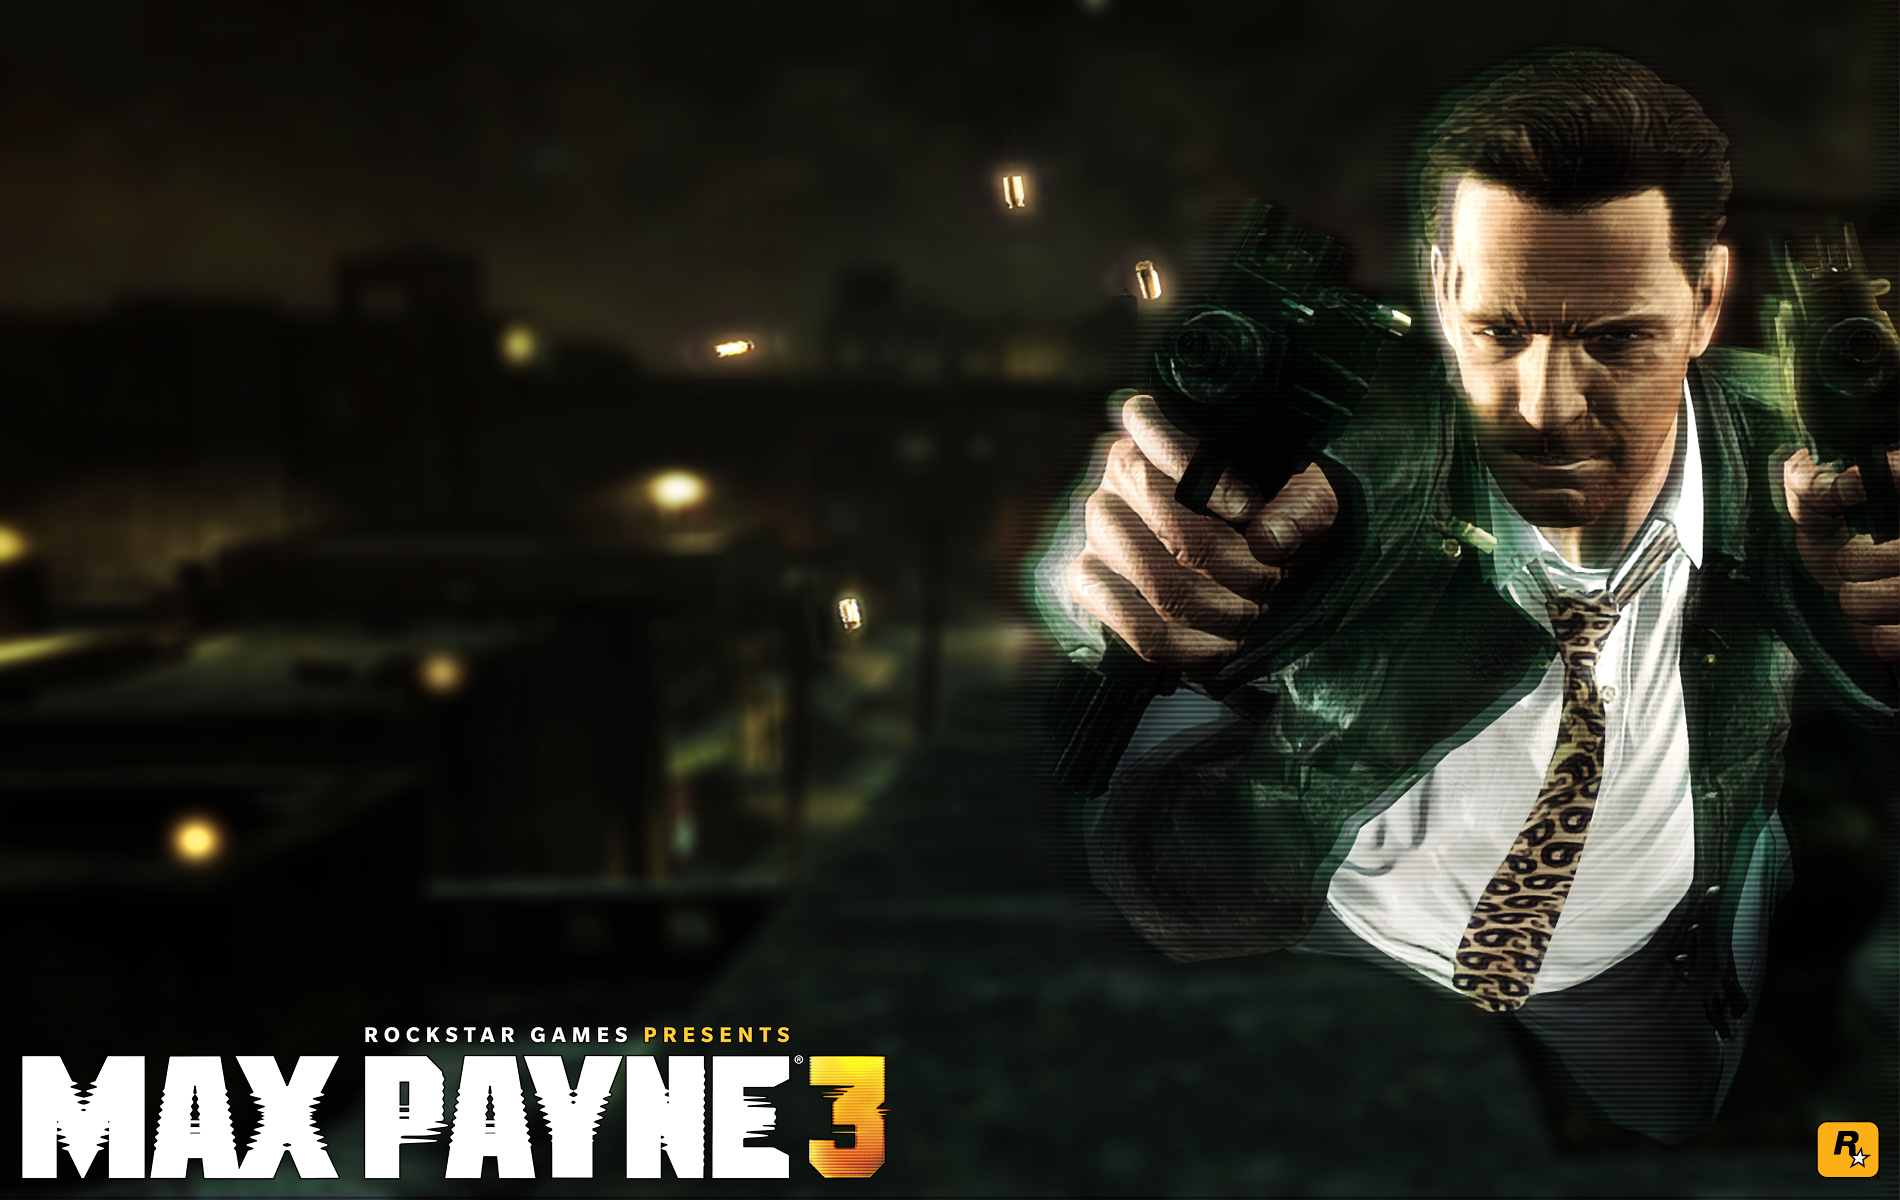 Max Payne Wallpapers